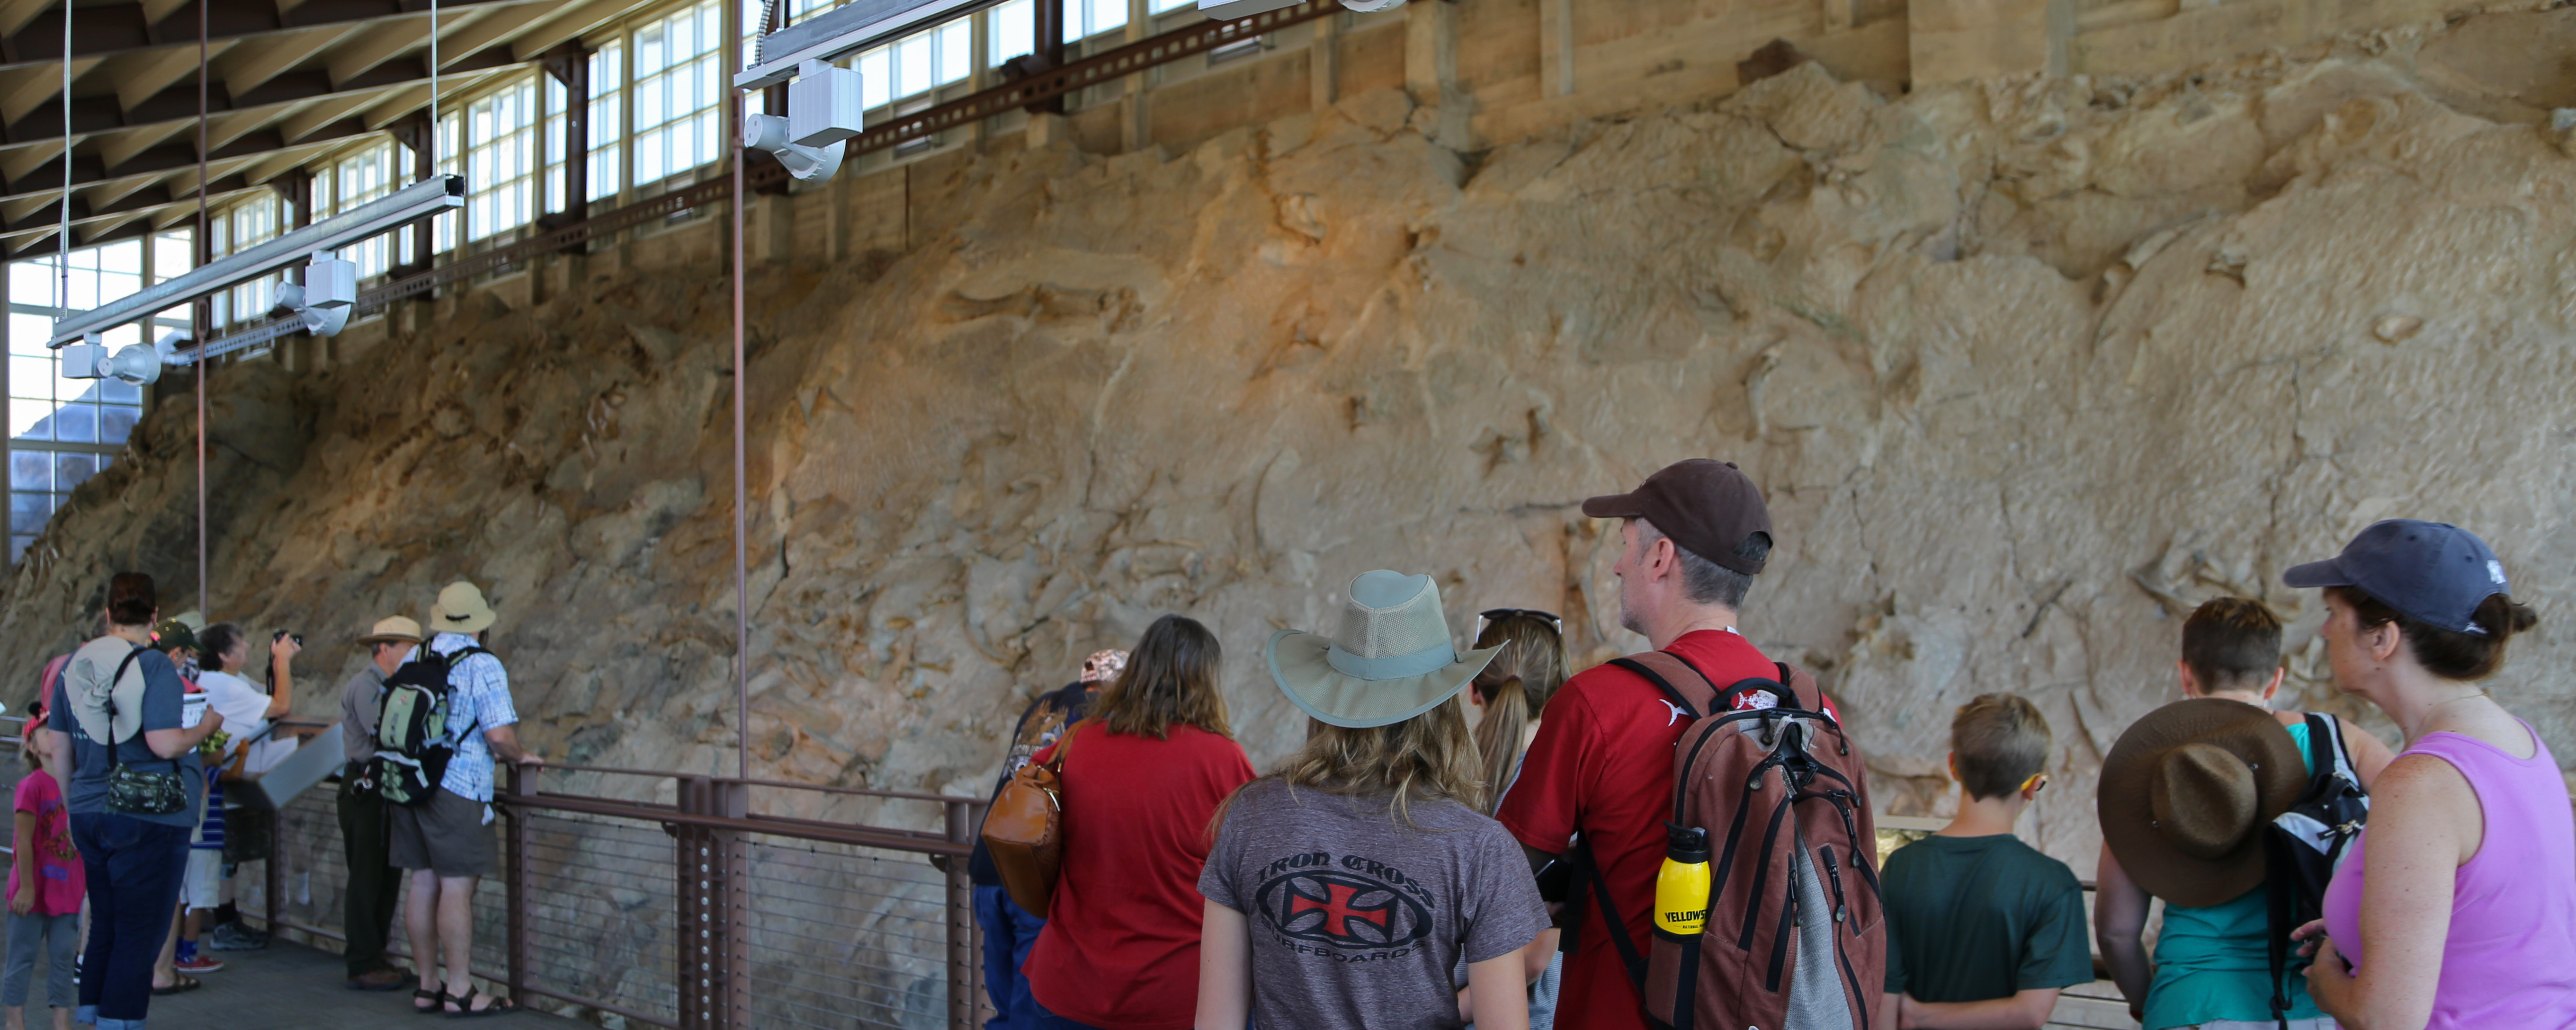 Quarry Exhibit Hall - Dinosaur National Monument (U.S. National Park